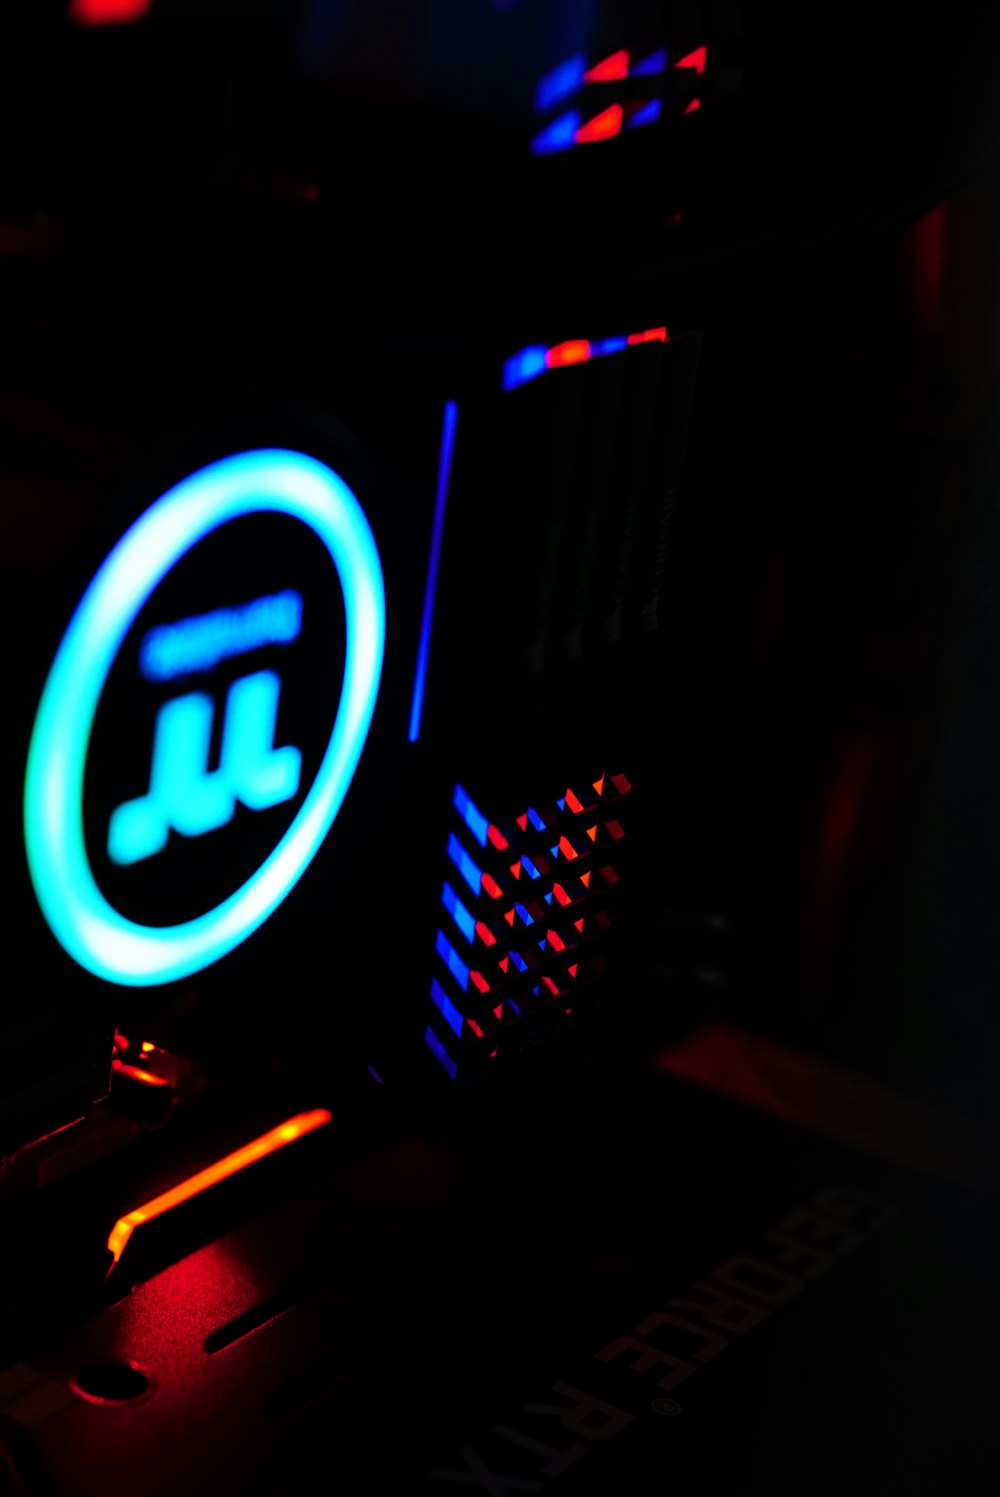 a close up of a lit up computer